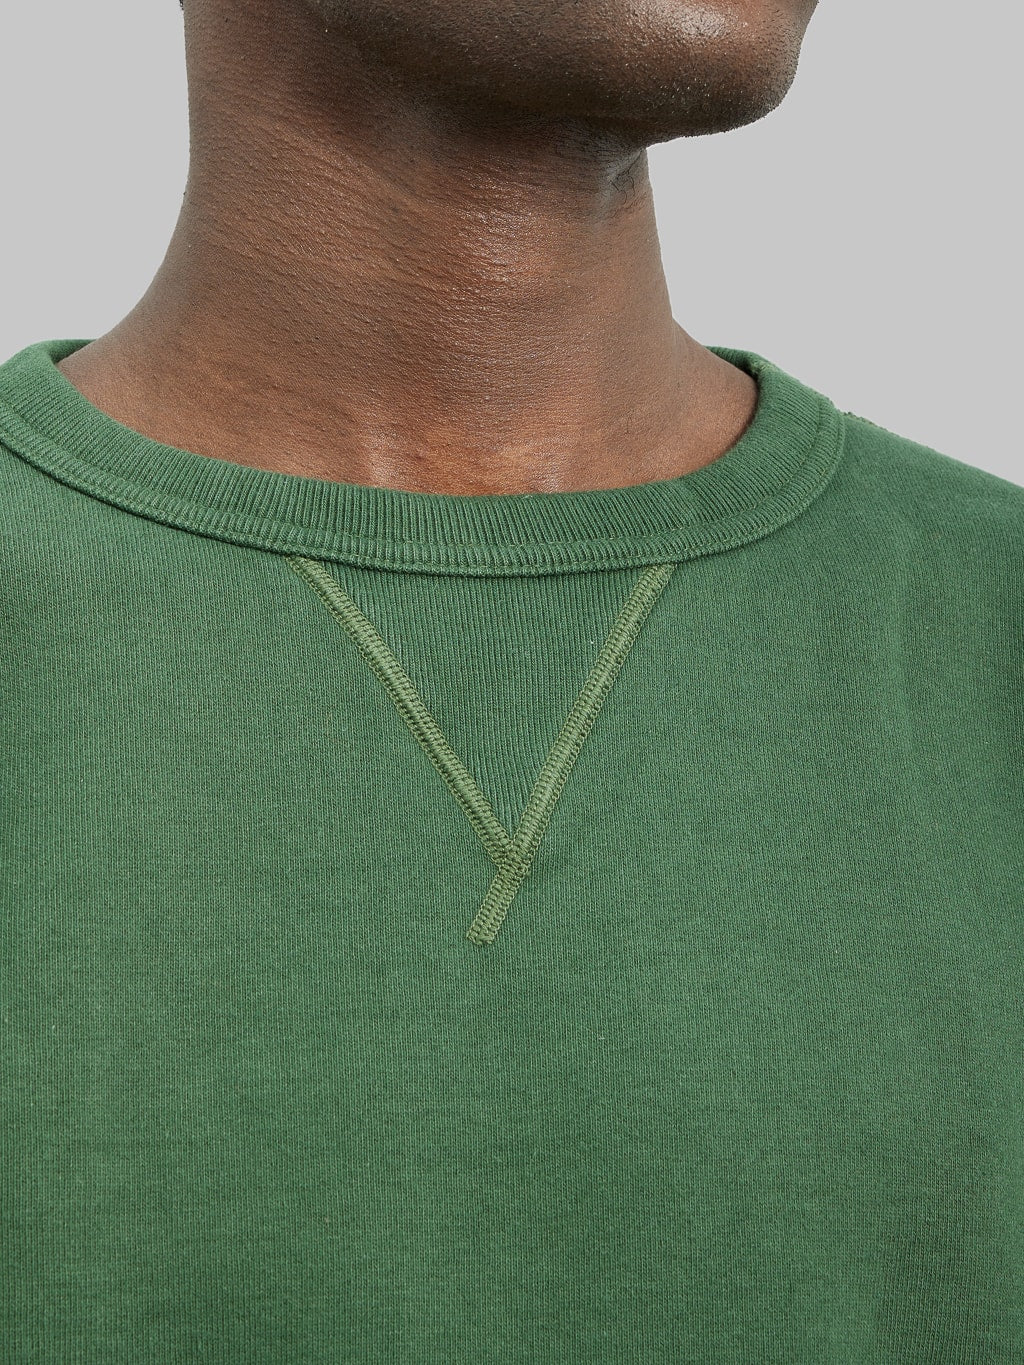 The Strike Gold Loopwheeled Sweatshirt Green v crew neck